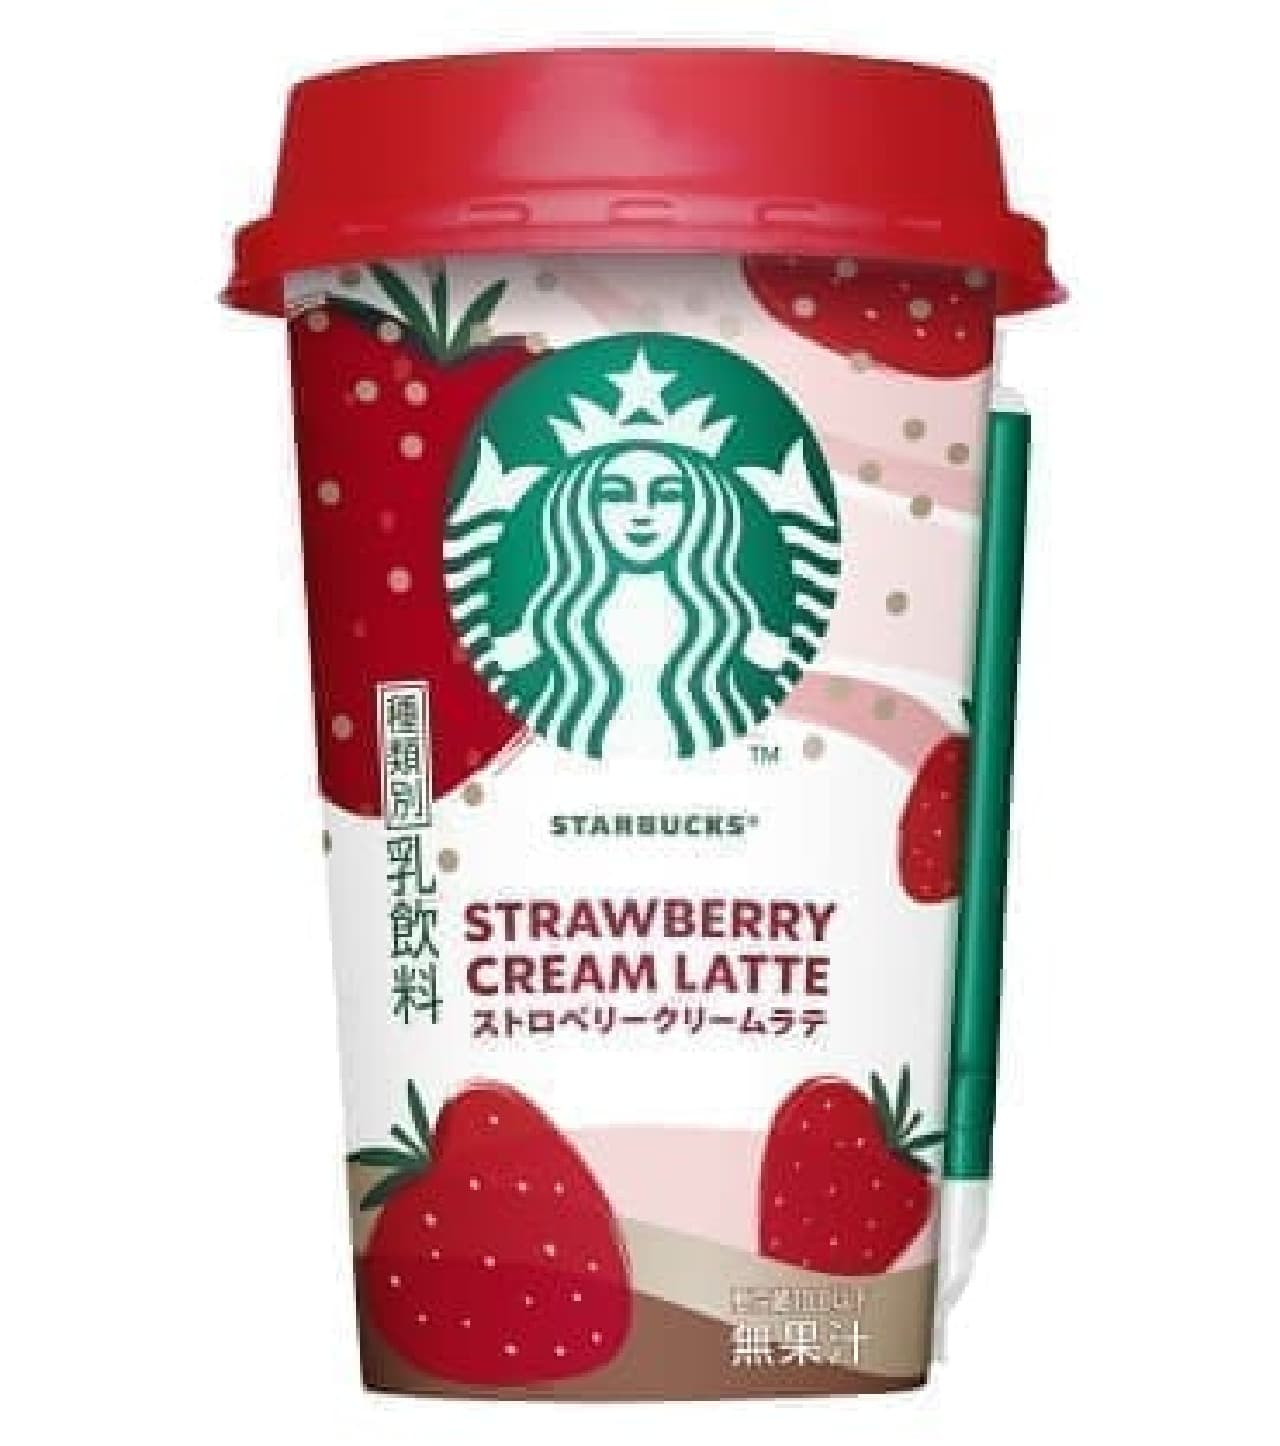 New chilled cup "Starbucks Strawberry Cream Latte"